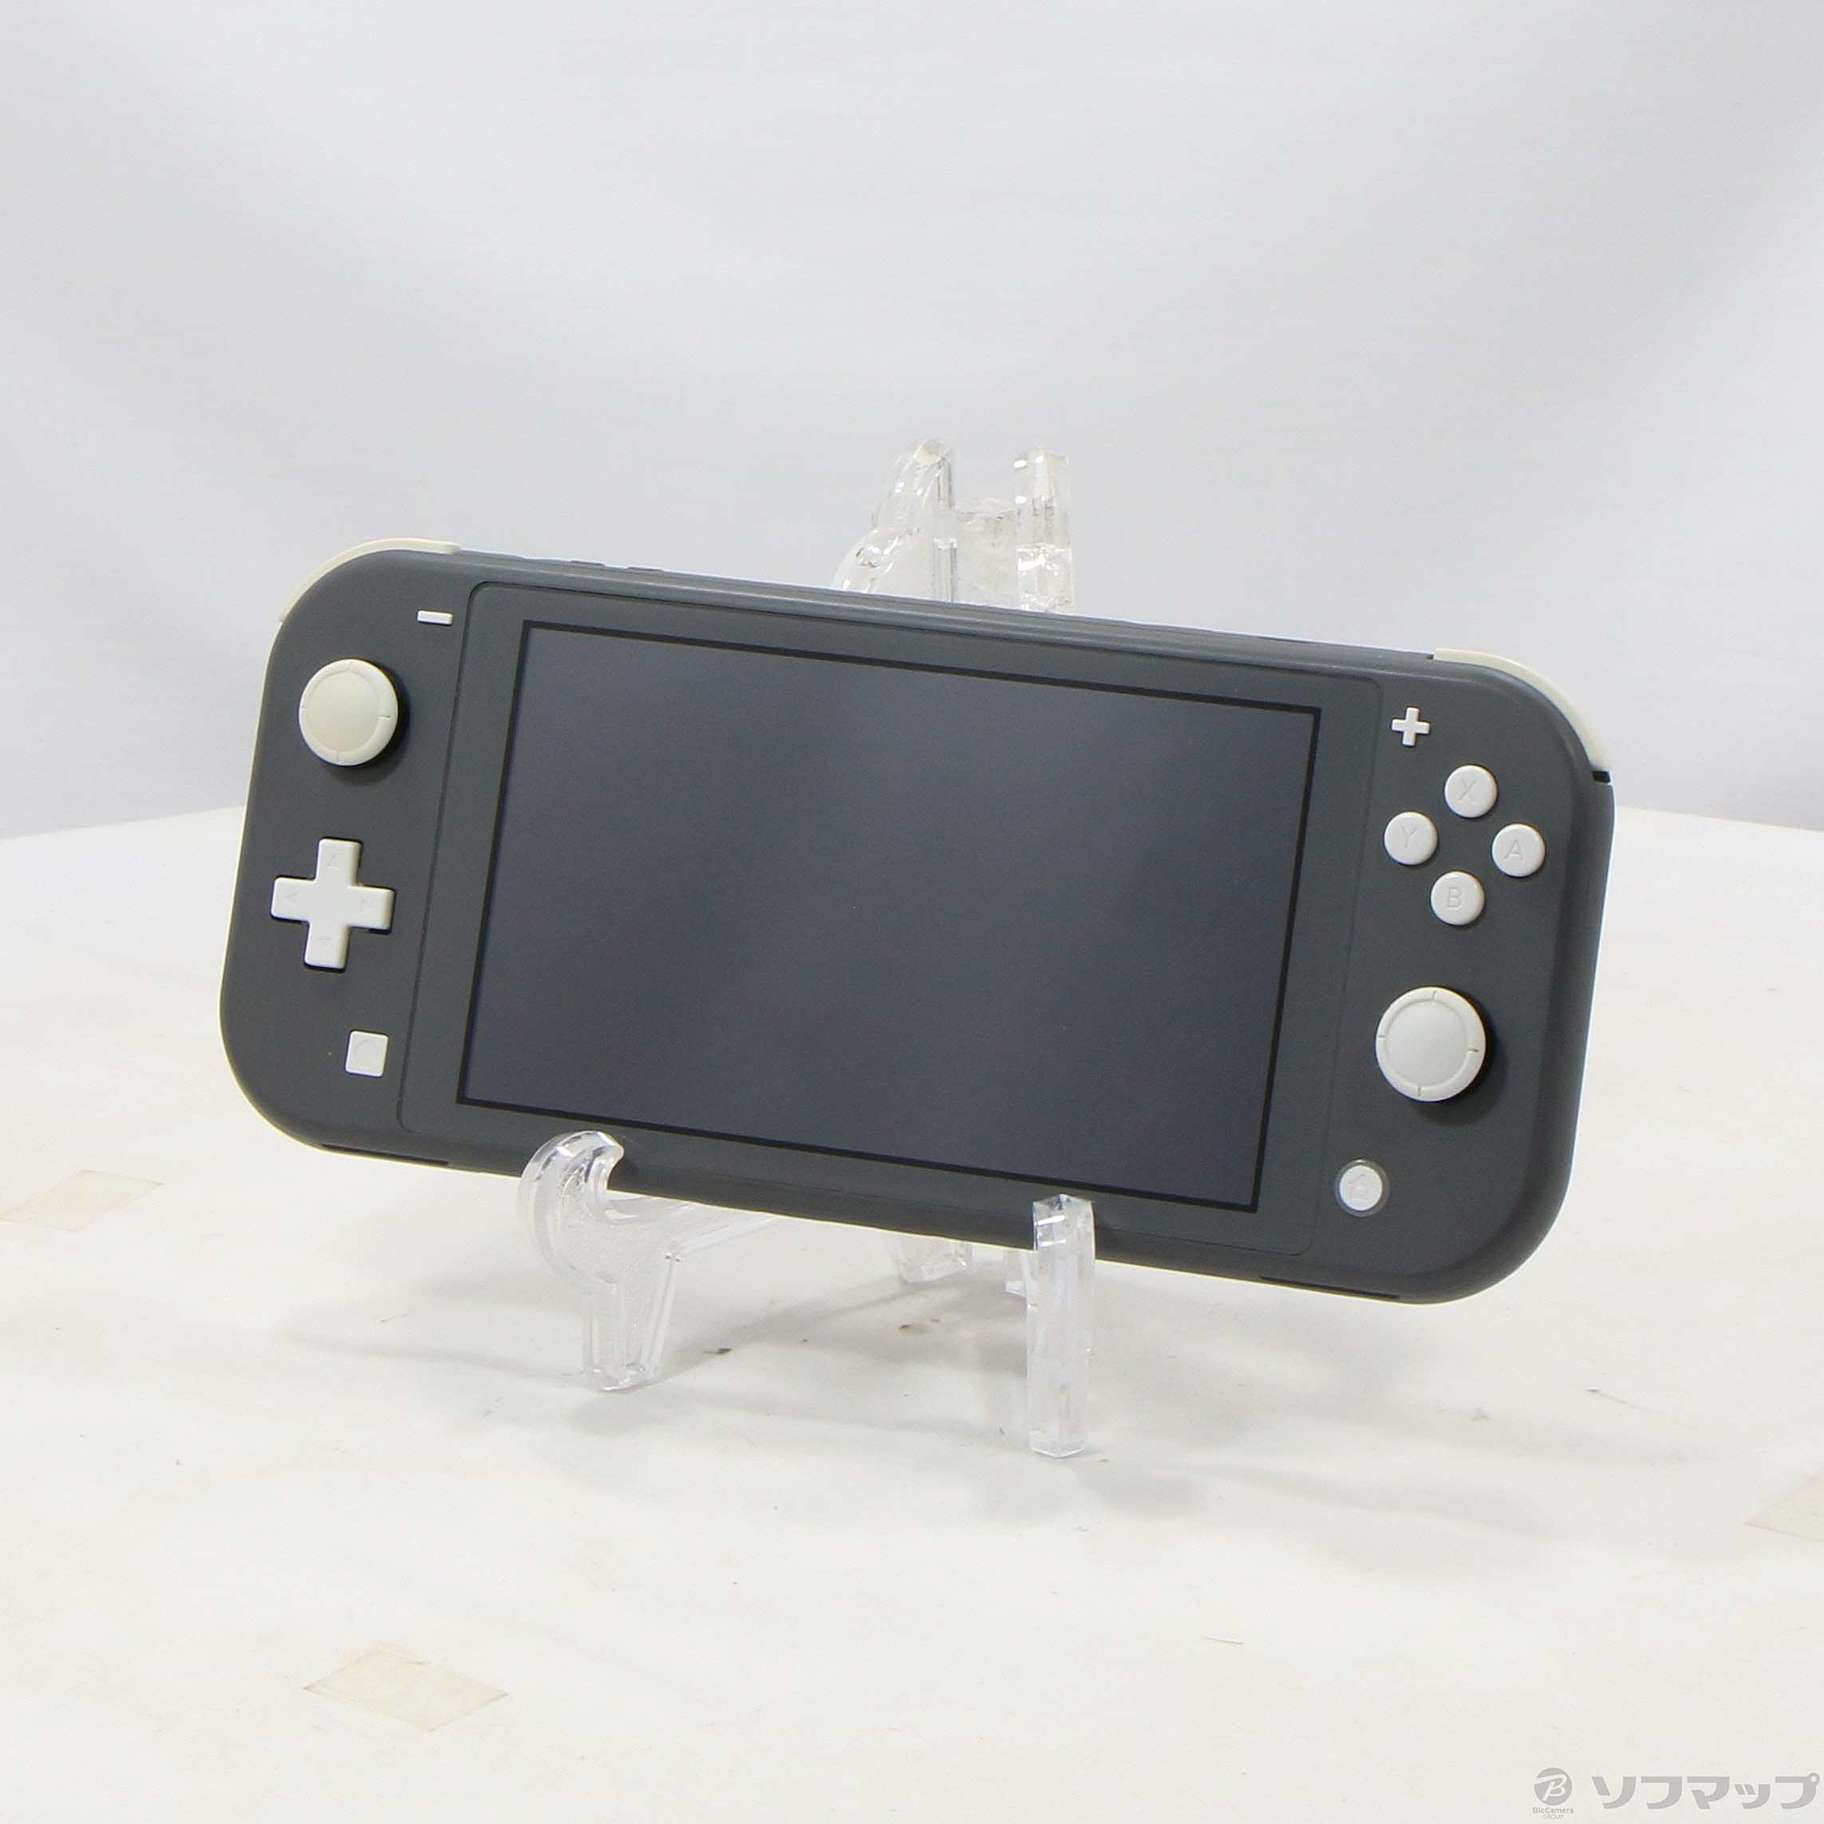 Nintendo Switch Liteグレー(値下げしました)